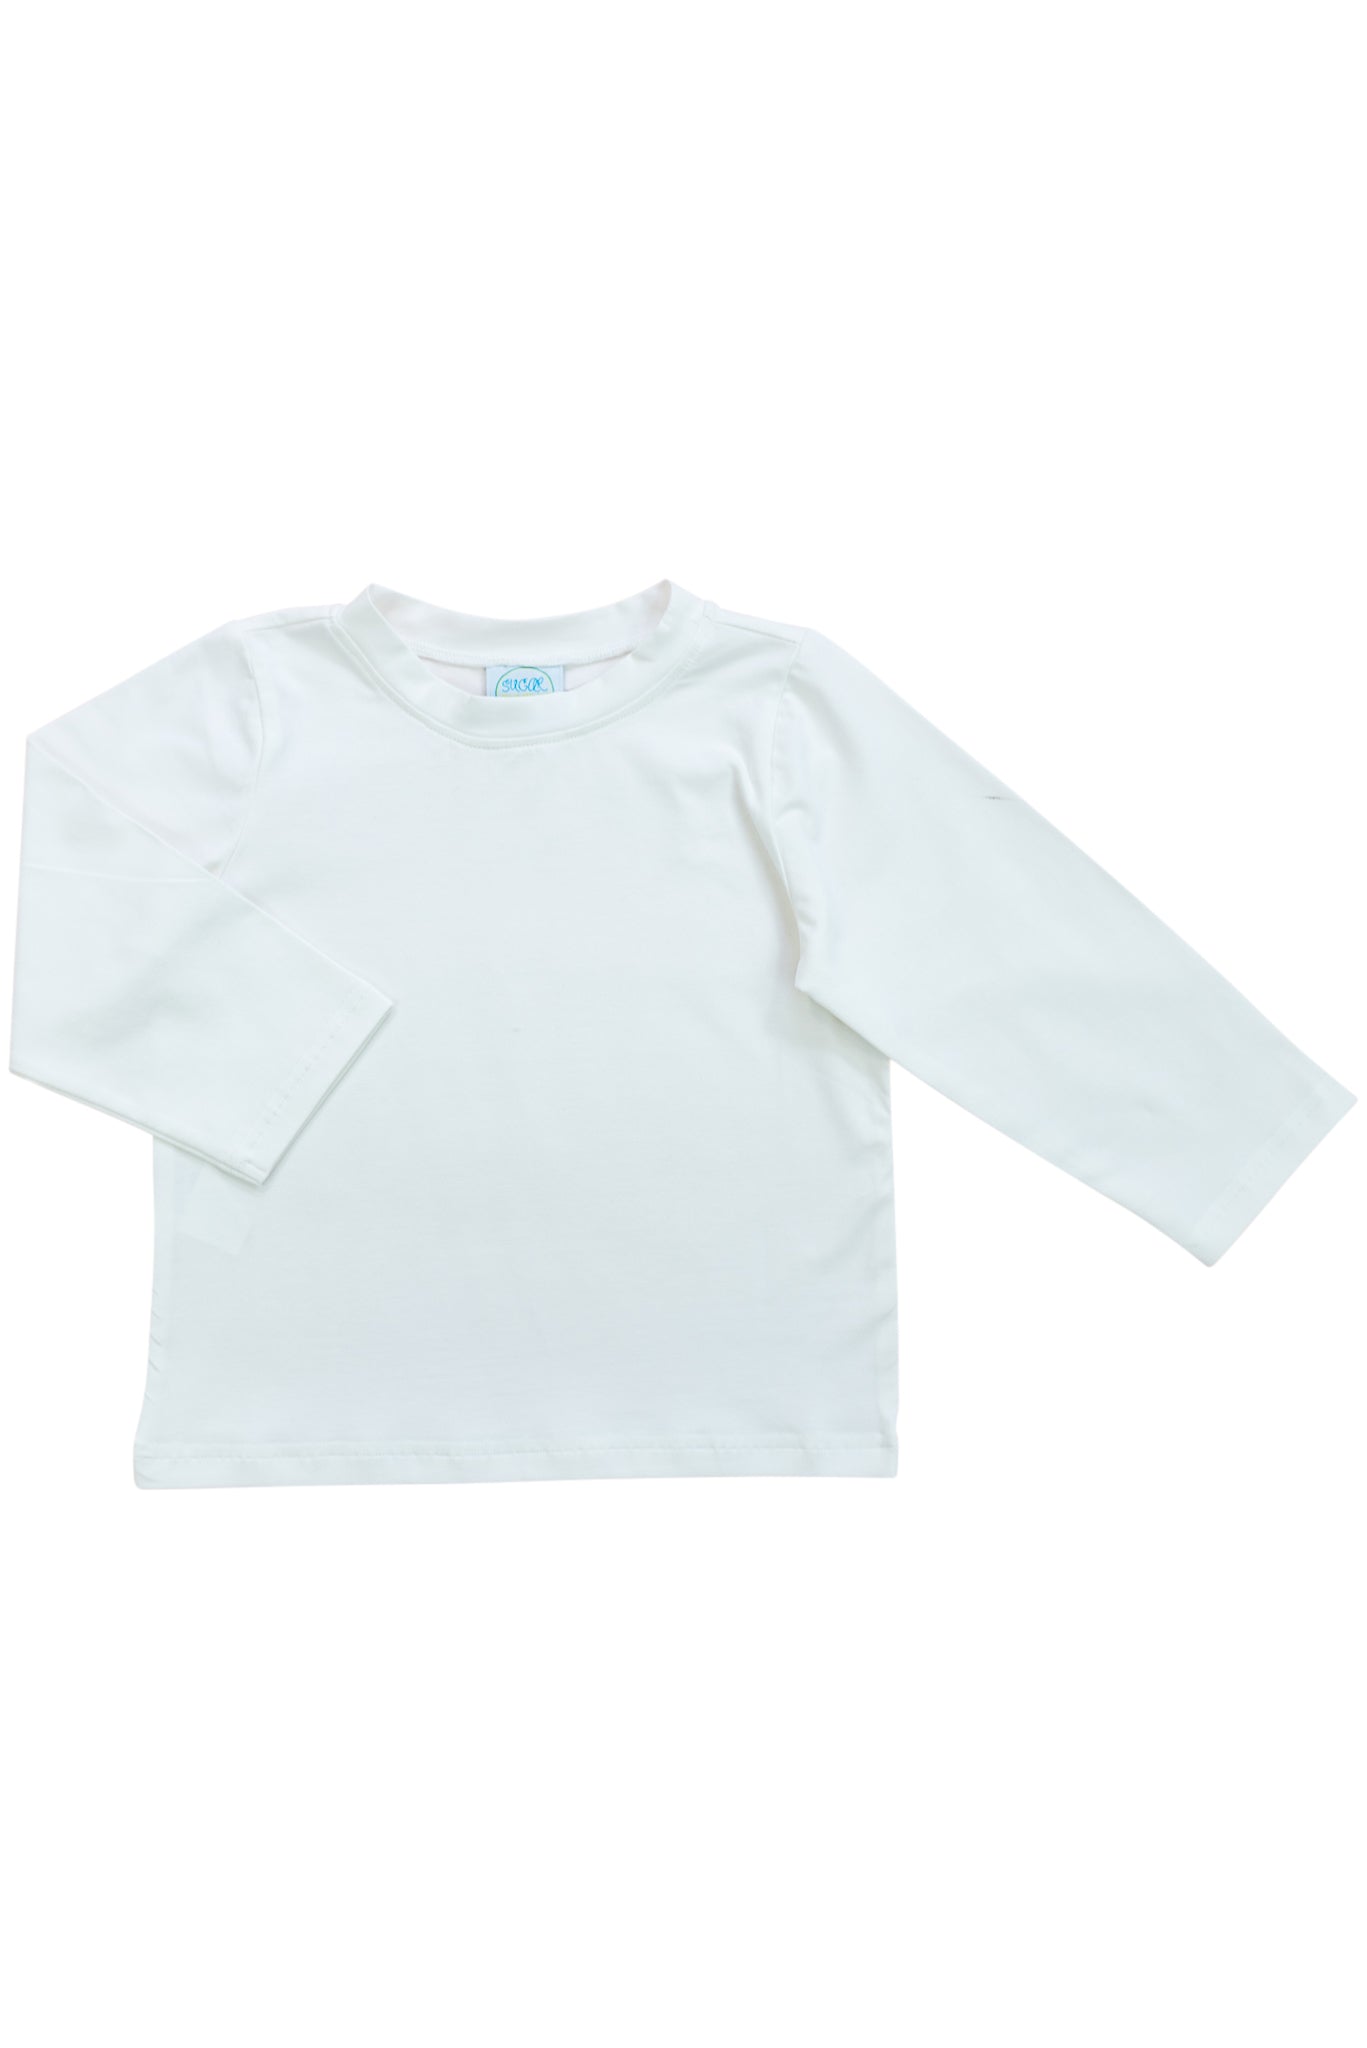 Boys Knit White Long Sleeve Shirt